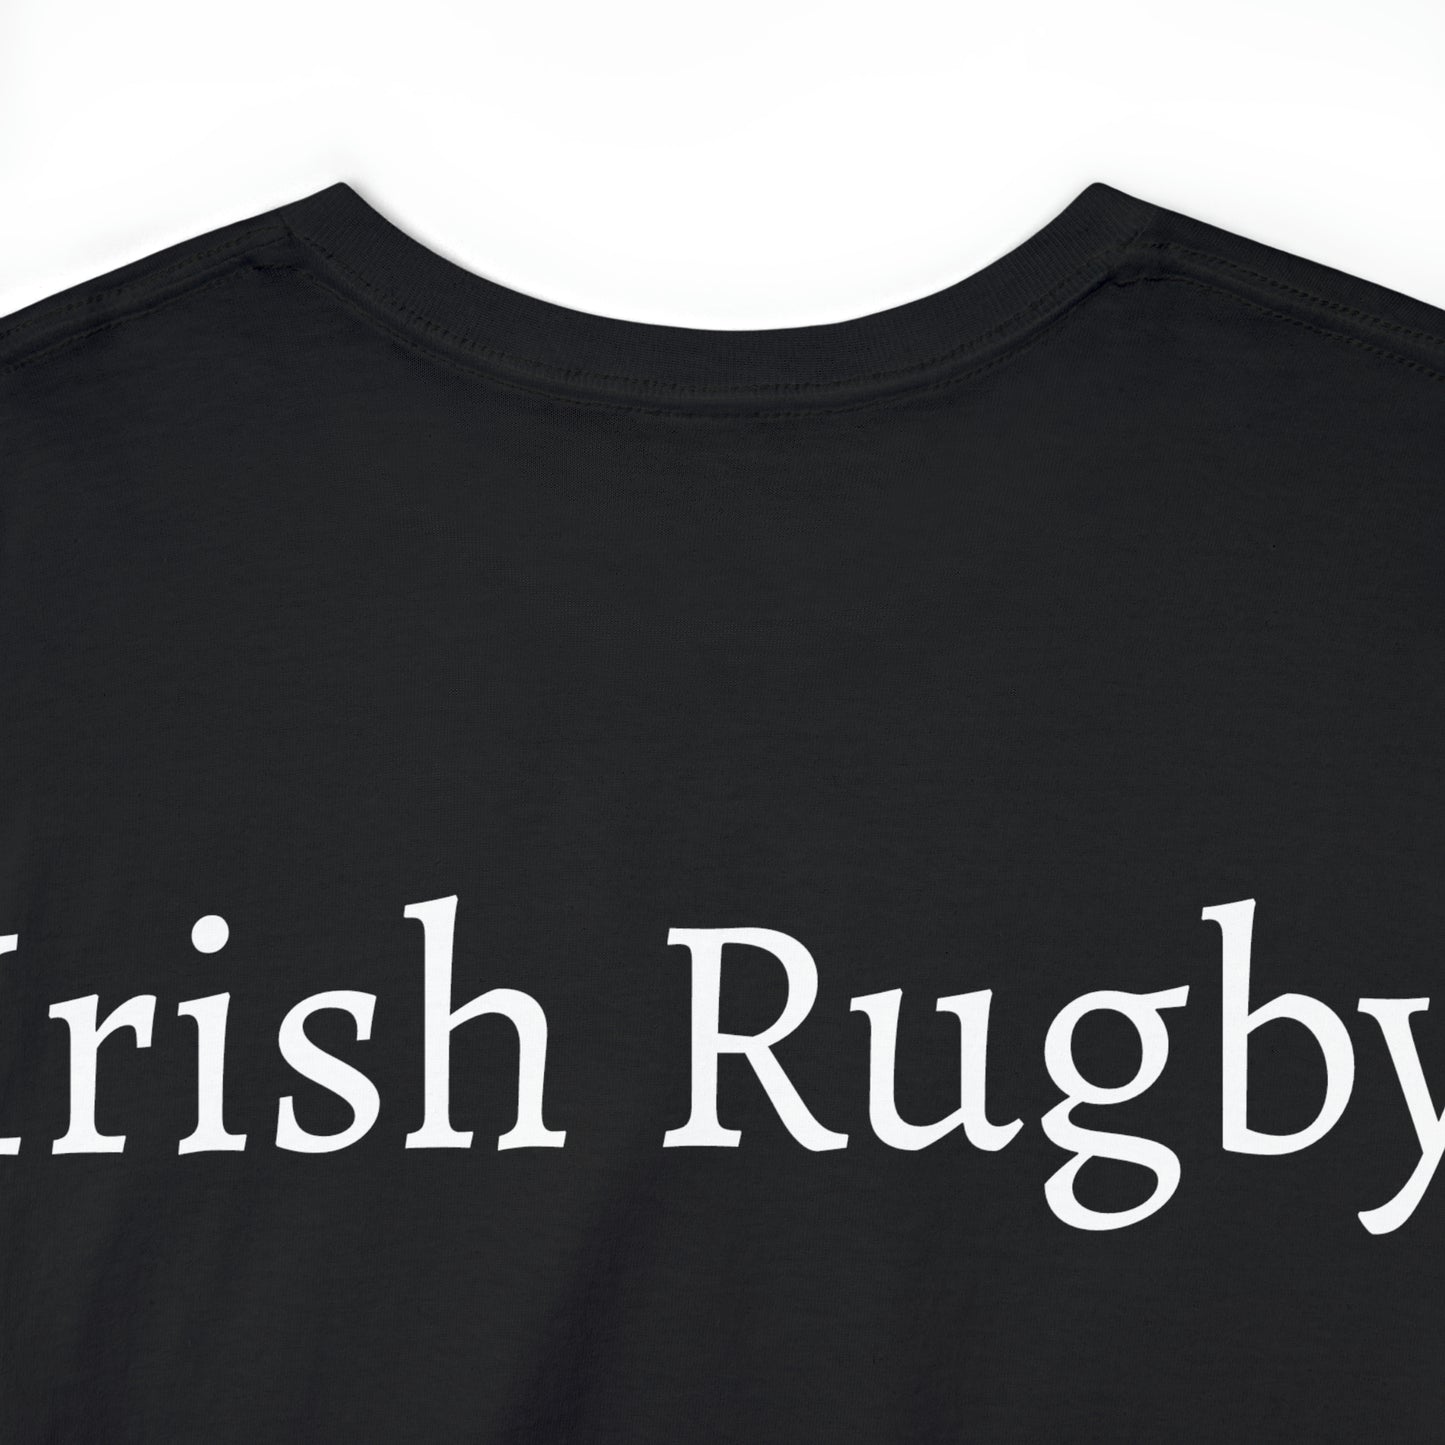 Ready Ireland - dark shirts